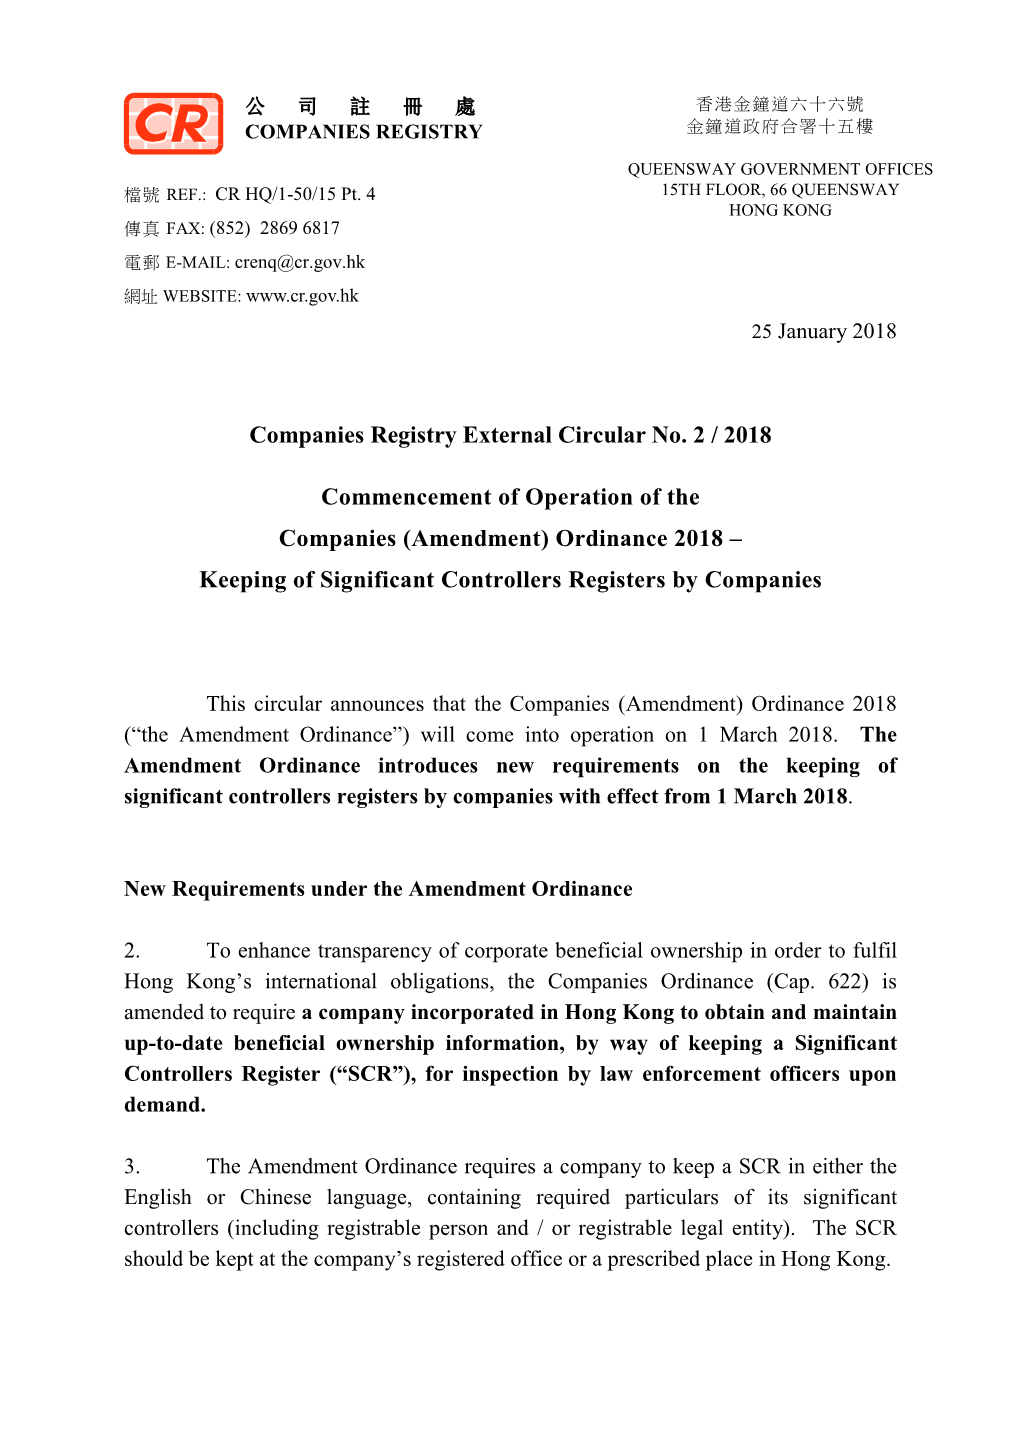 Companies Registry External Circular No. 2 / 2018